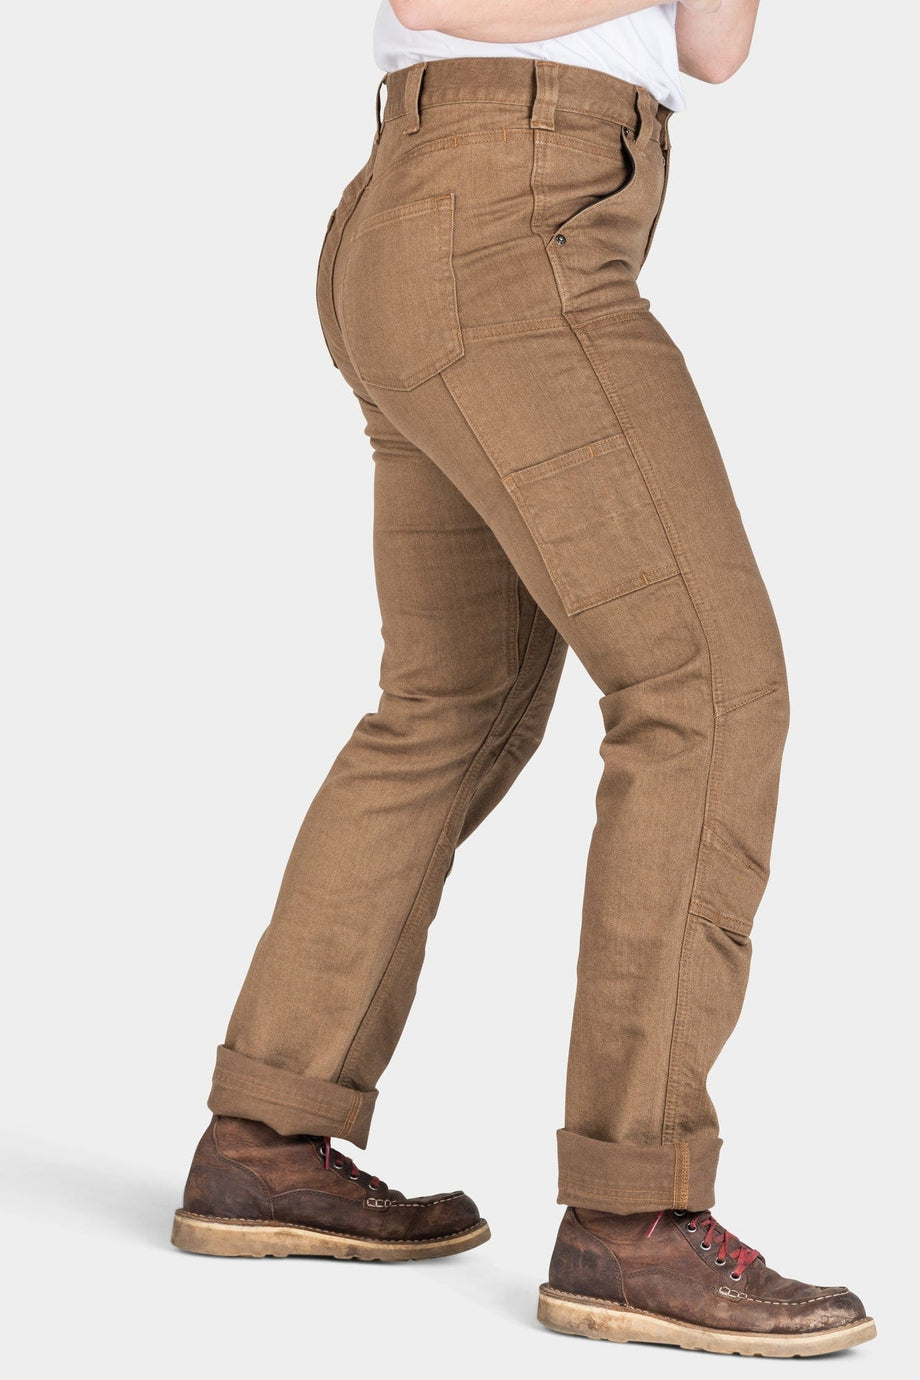 Women's Dovetail Workwear Pants - Jeans